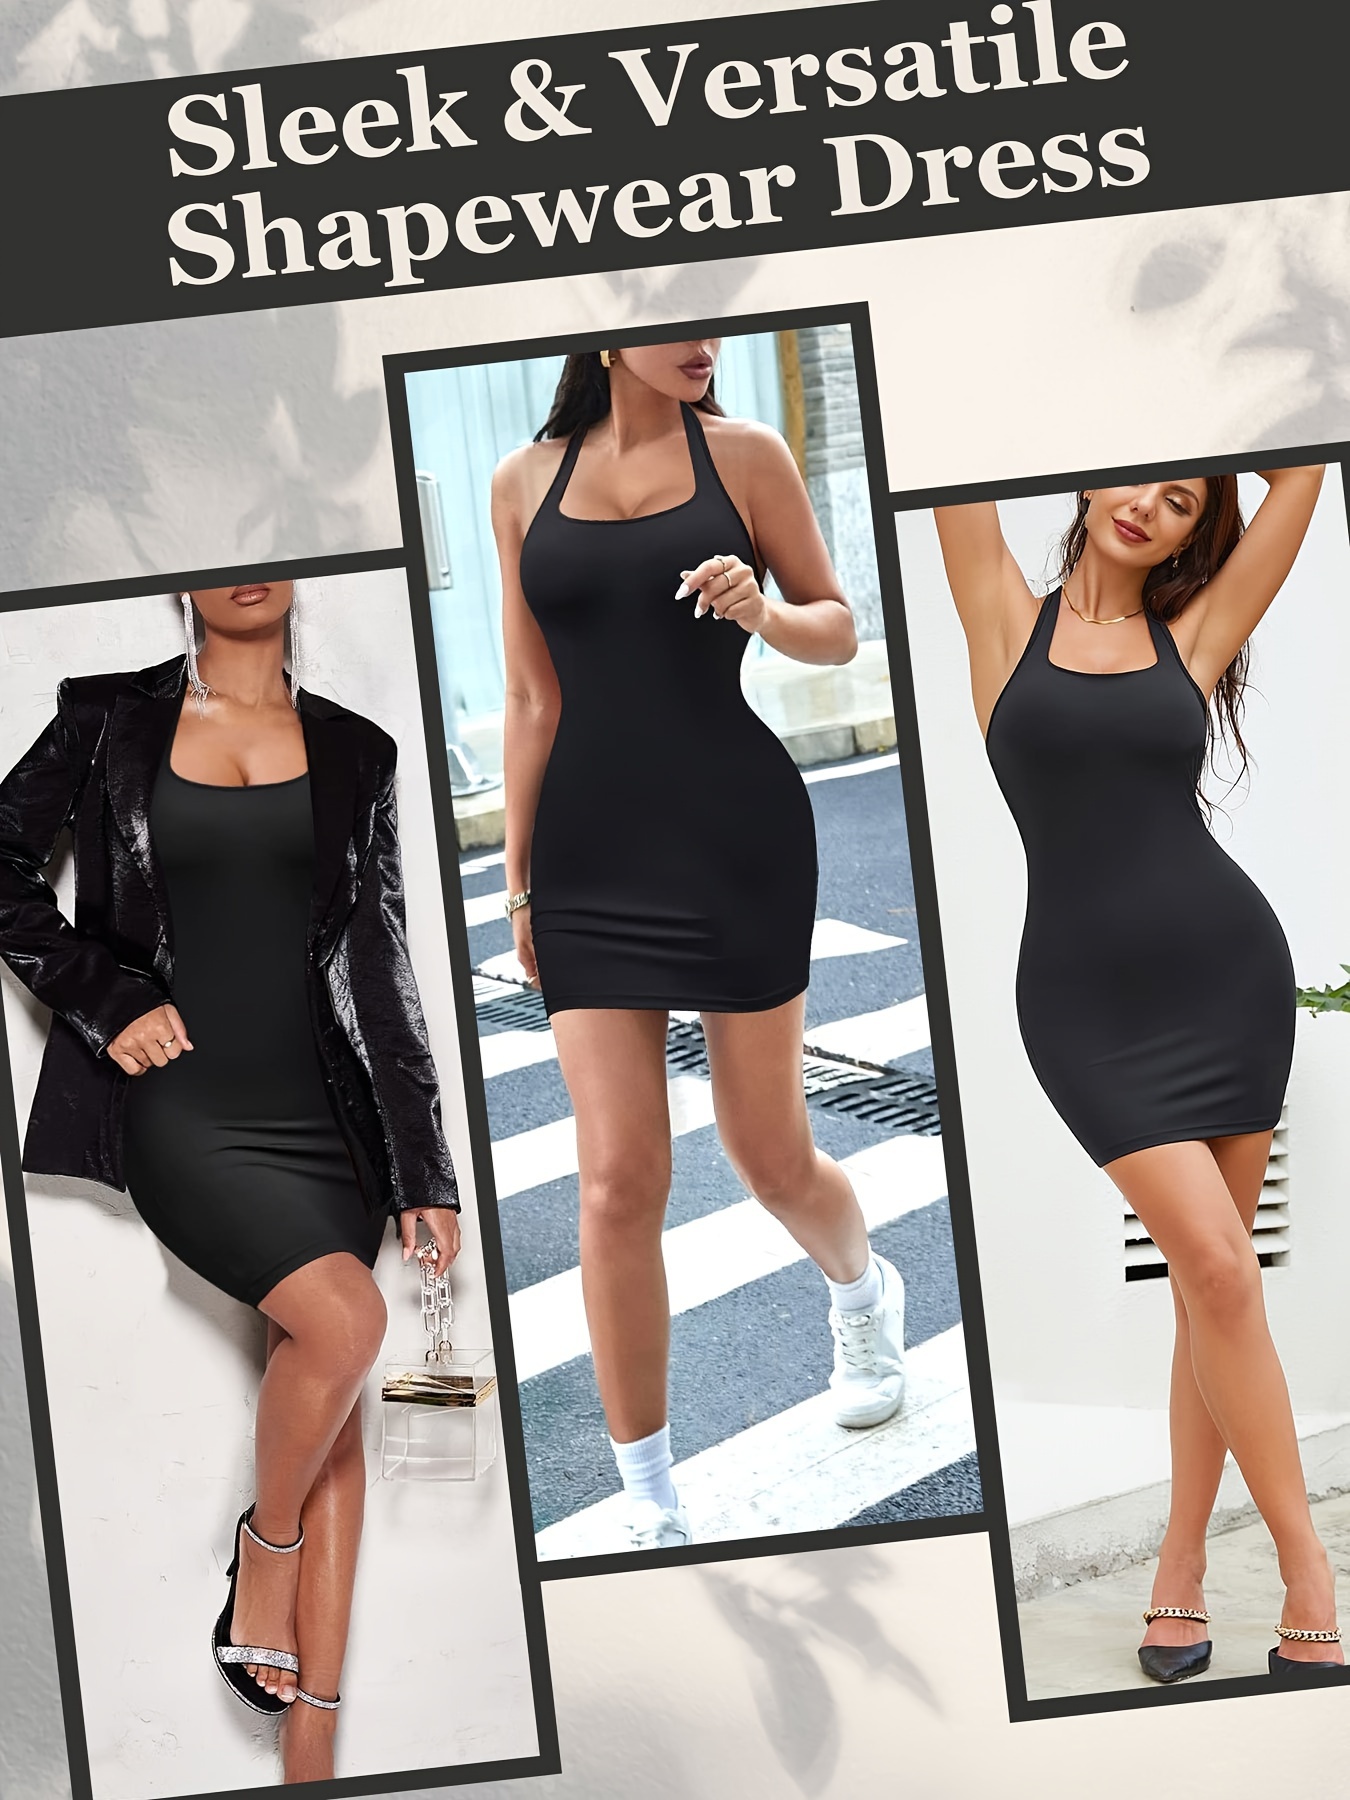 Seamless Shaping Halter Dress, Tummy Control Slimming Backless Body Shaper,  Women's Underwear & Shapewear